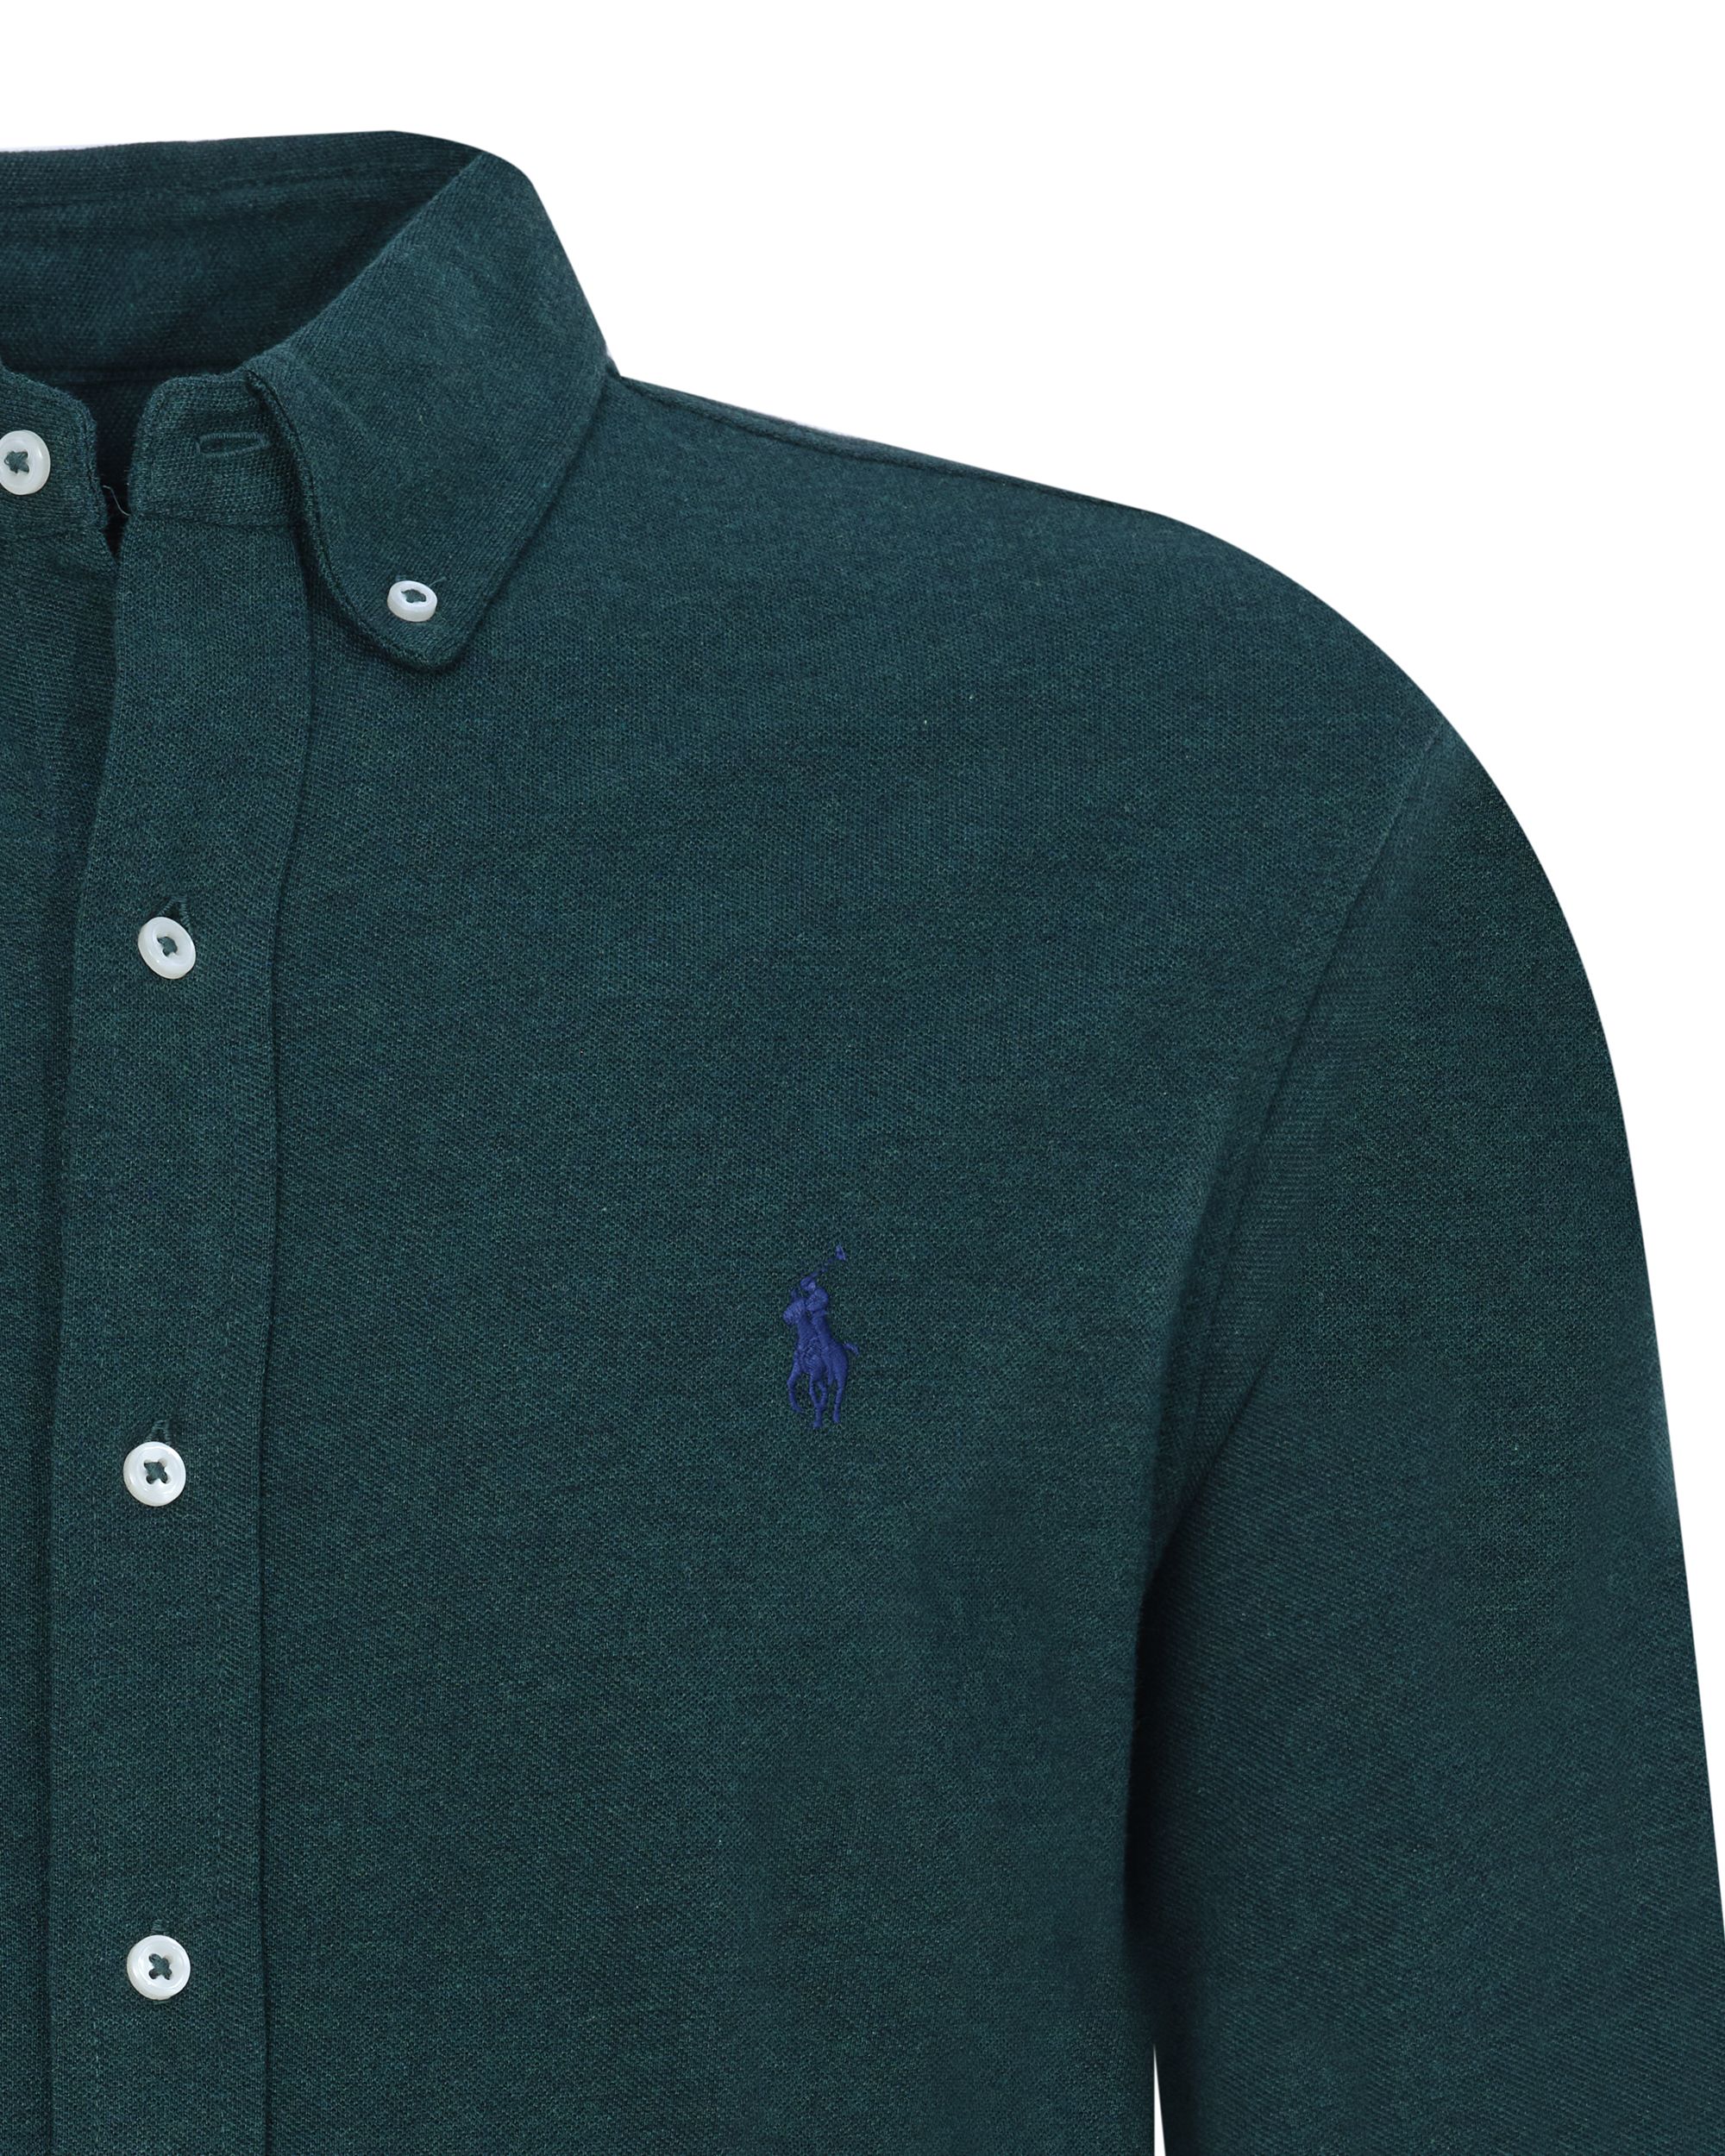 Polo Ralph Lauren Casual Overhemd LM Donker groen 080585-001-L